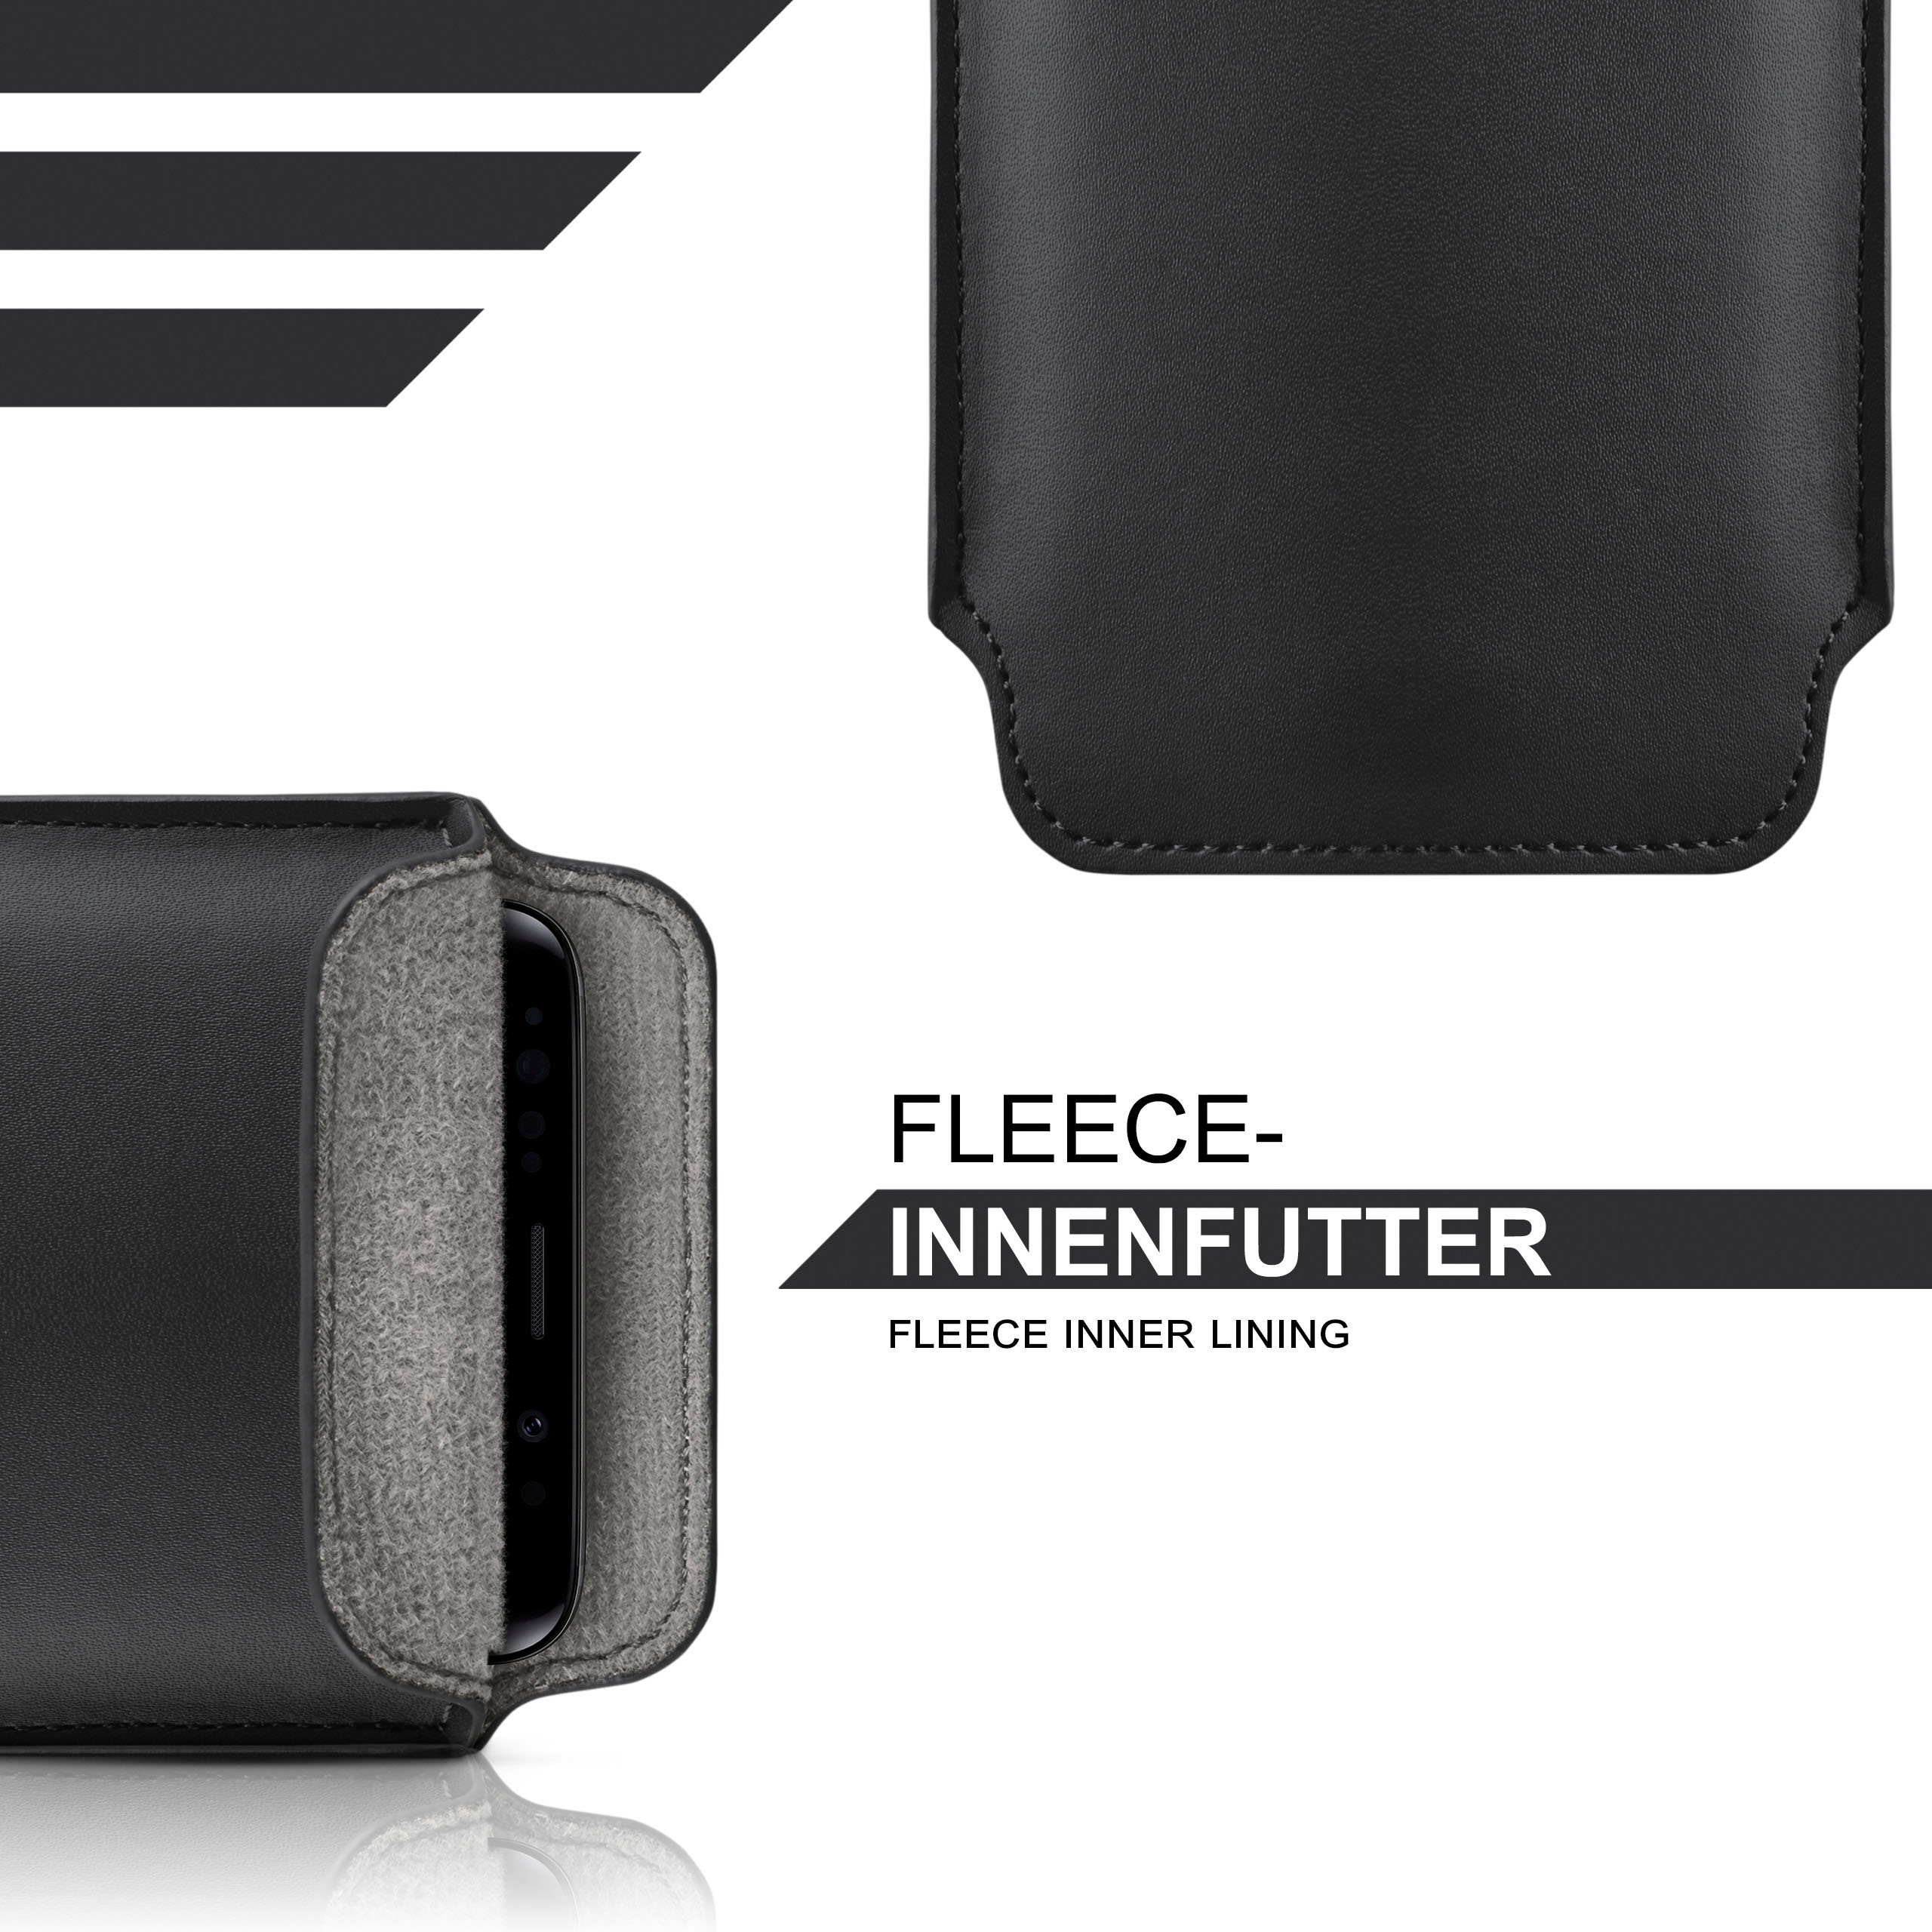 MOEX Slide Sony, Deep-Black Full Xperia X Case, Compact, Cover